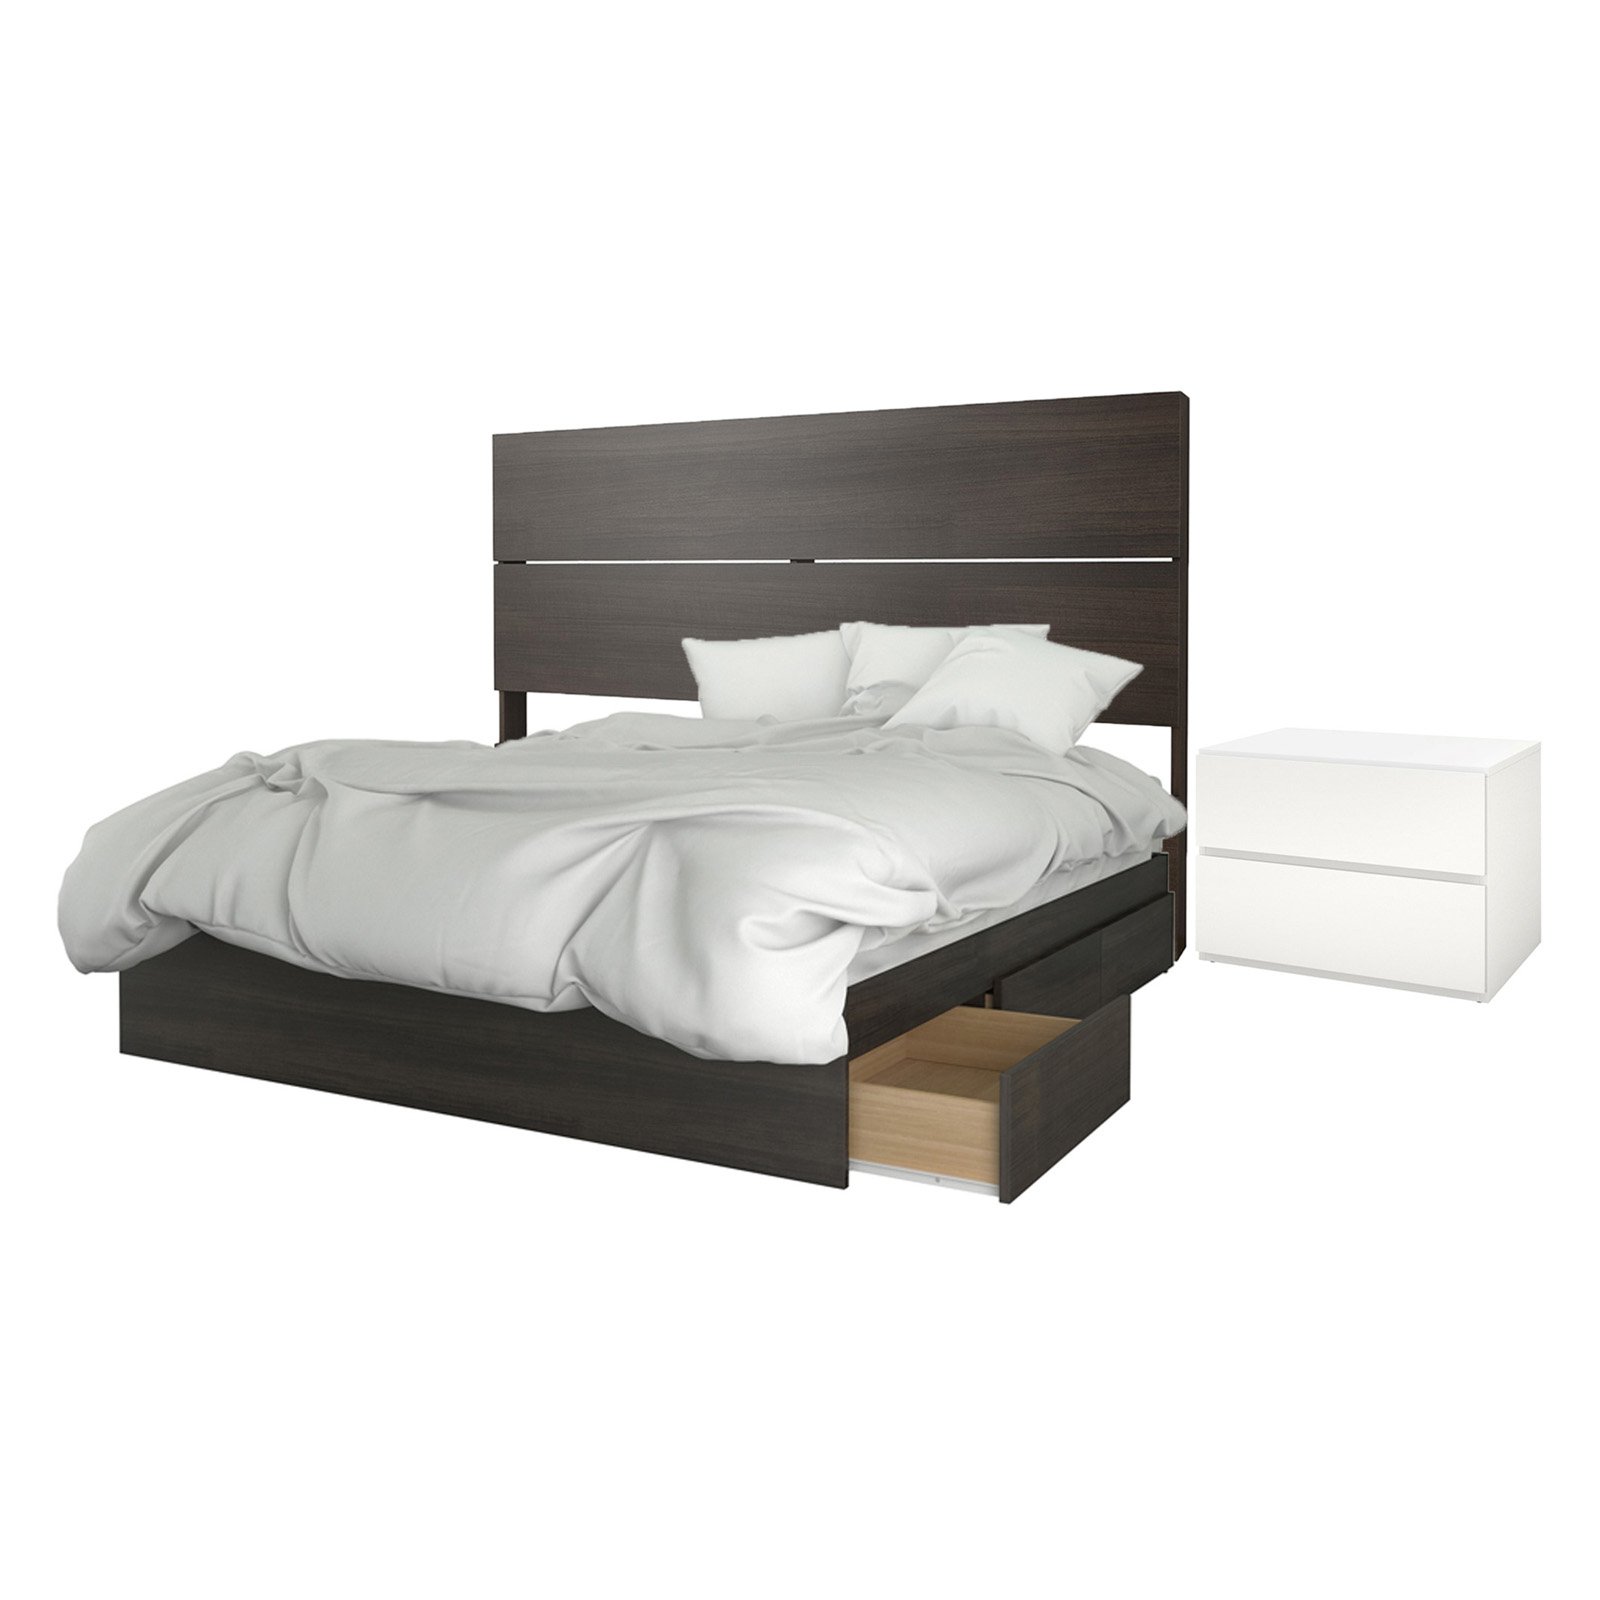 Nexera Melody Platform Storage Bed with Nightstand - image 1 of 11